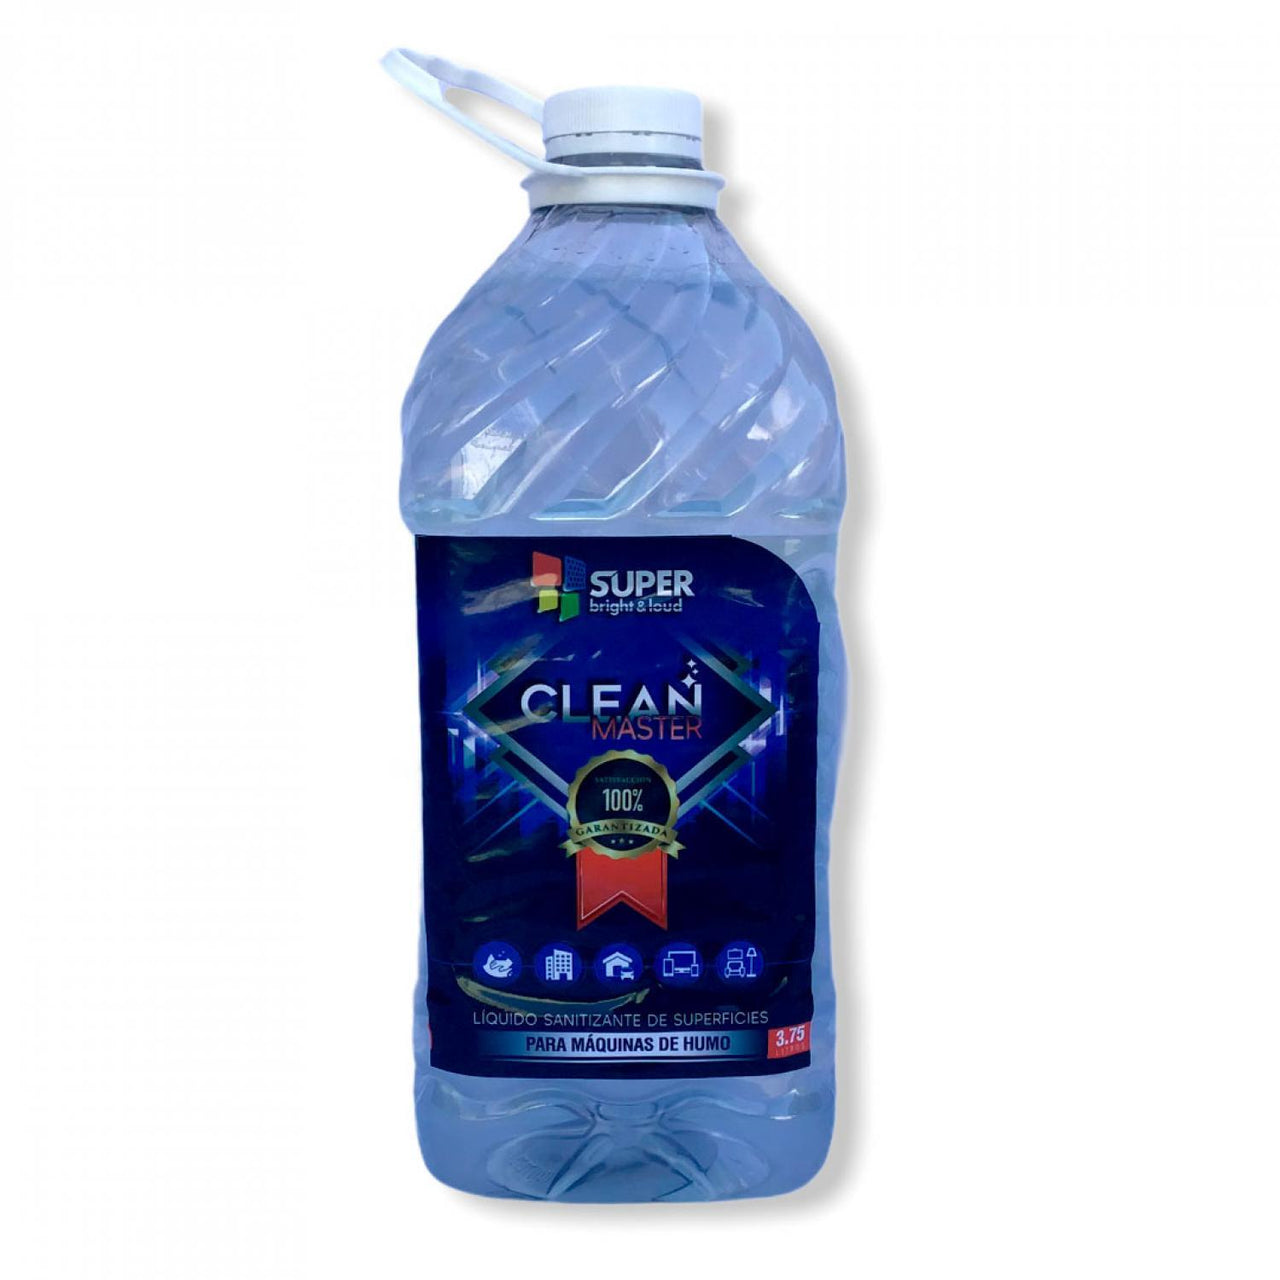 Liquido Sanitizante Humo para Maquina de Humo Clean Master galon